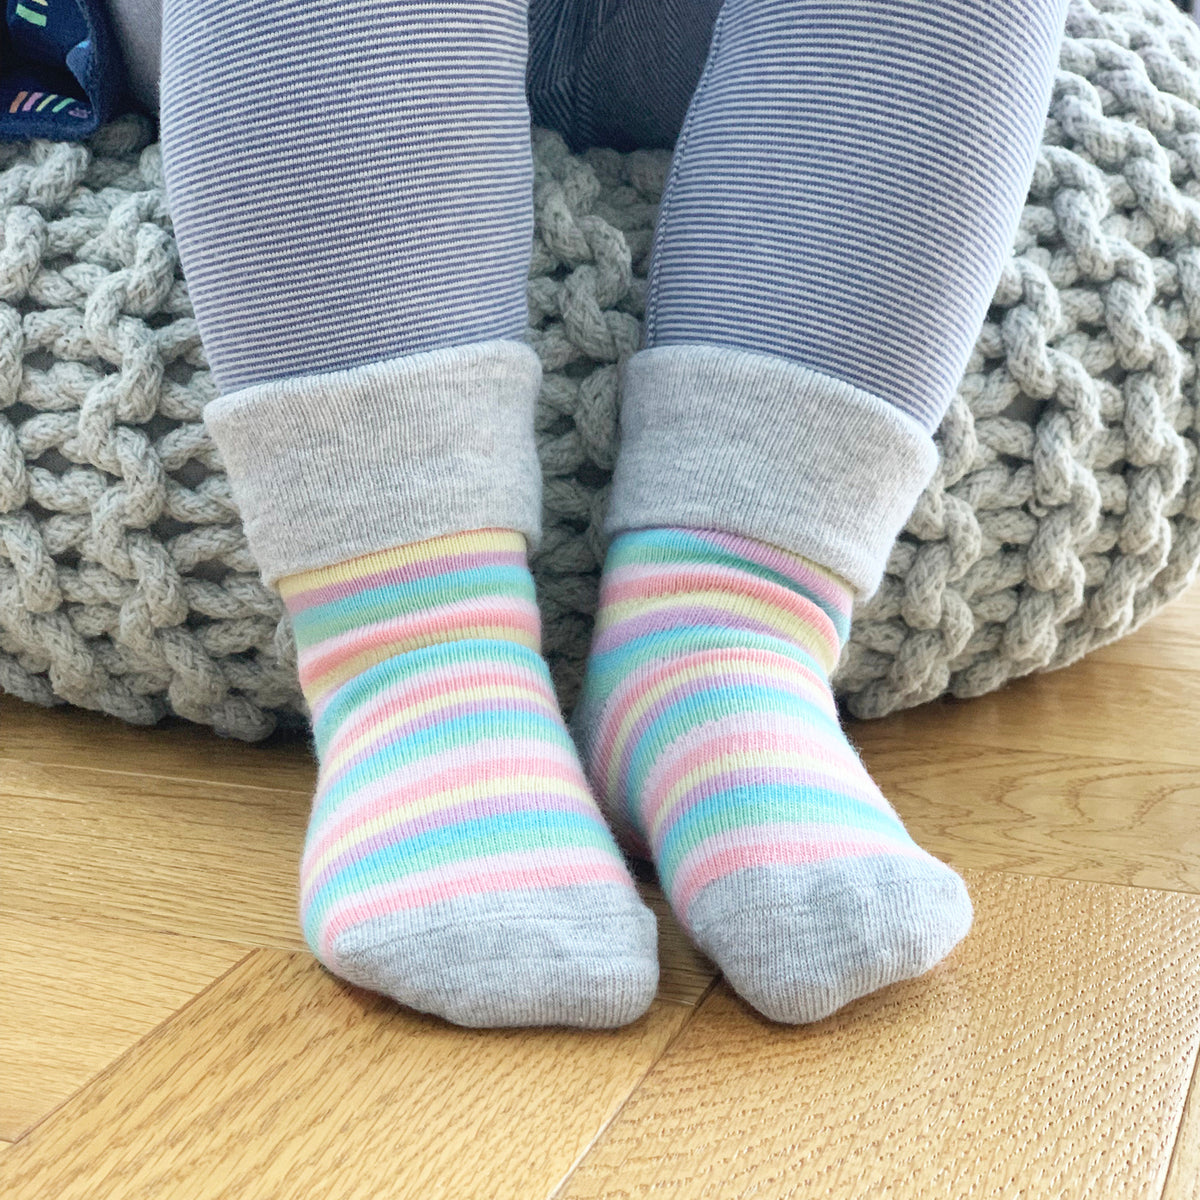 Leggings & Socks Super Set - Pink